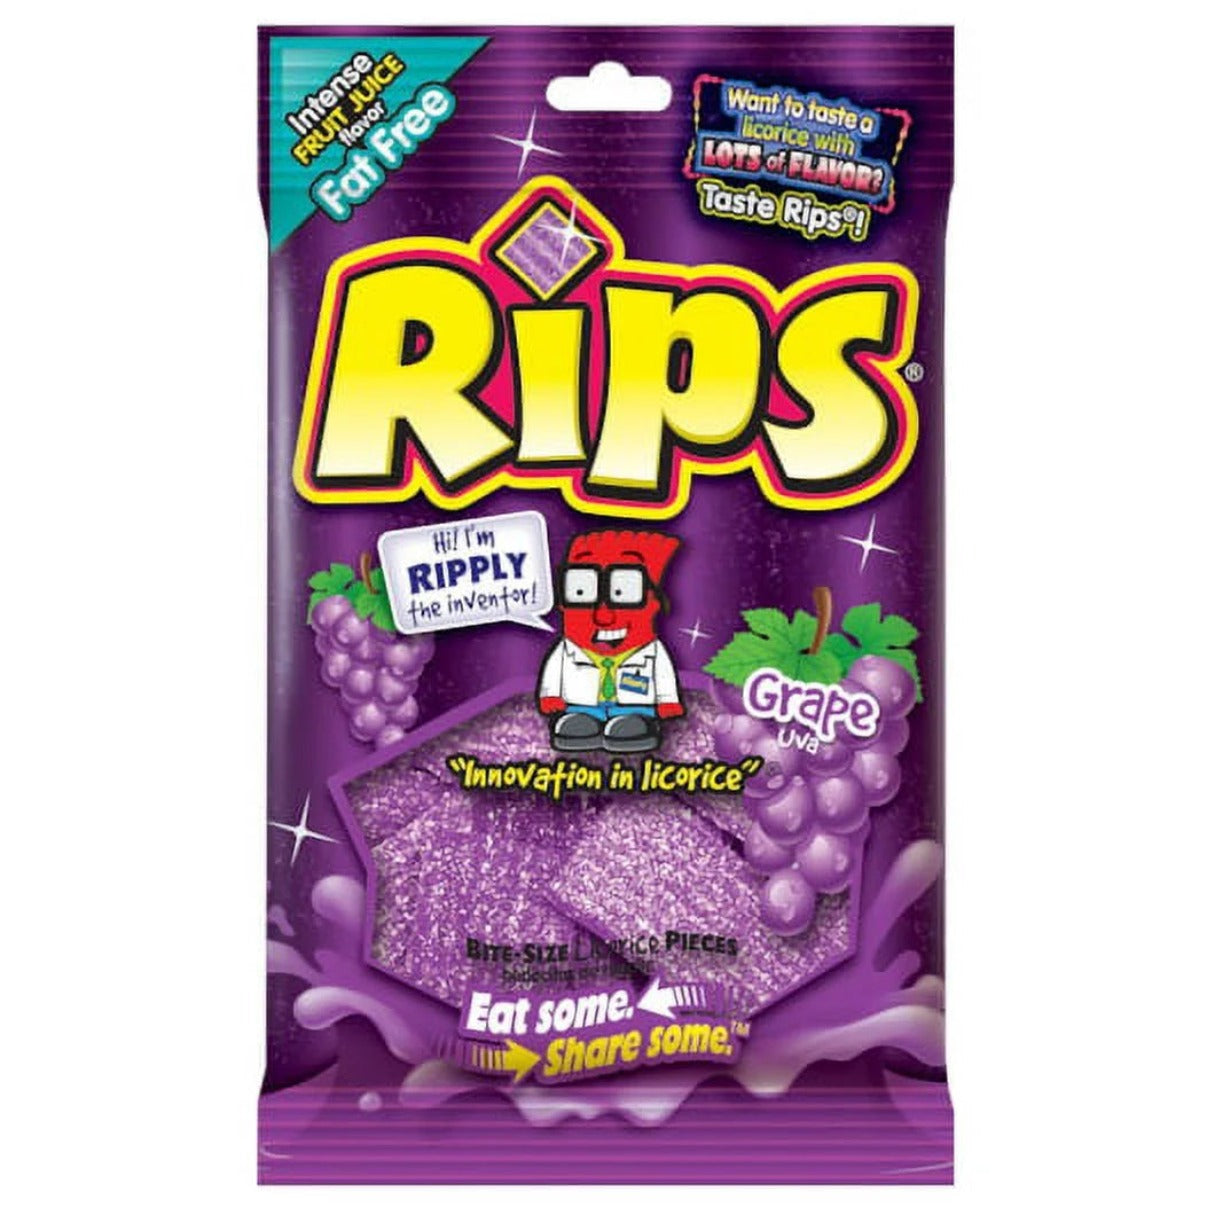 Rips Bites Grape 4oz - 12ct